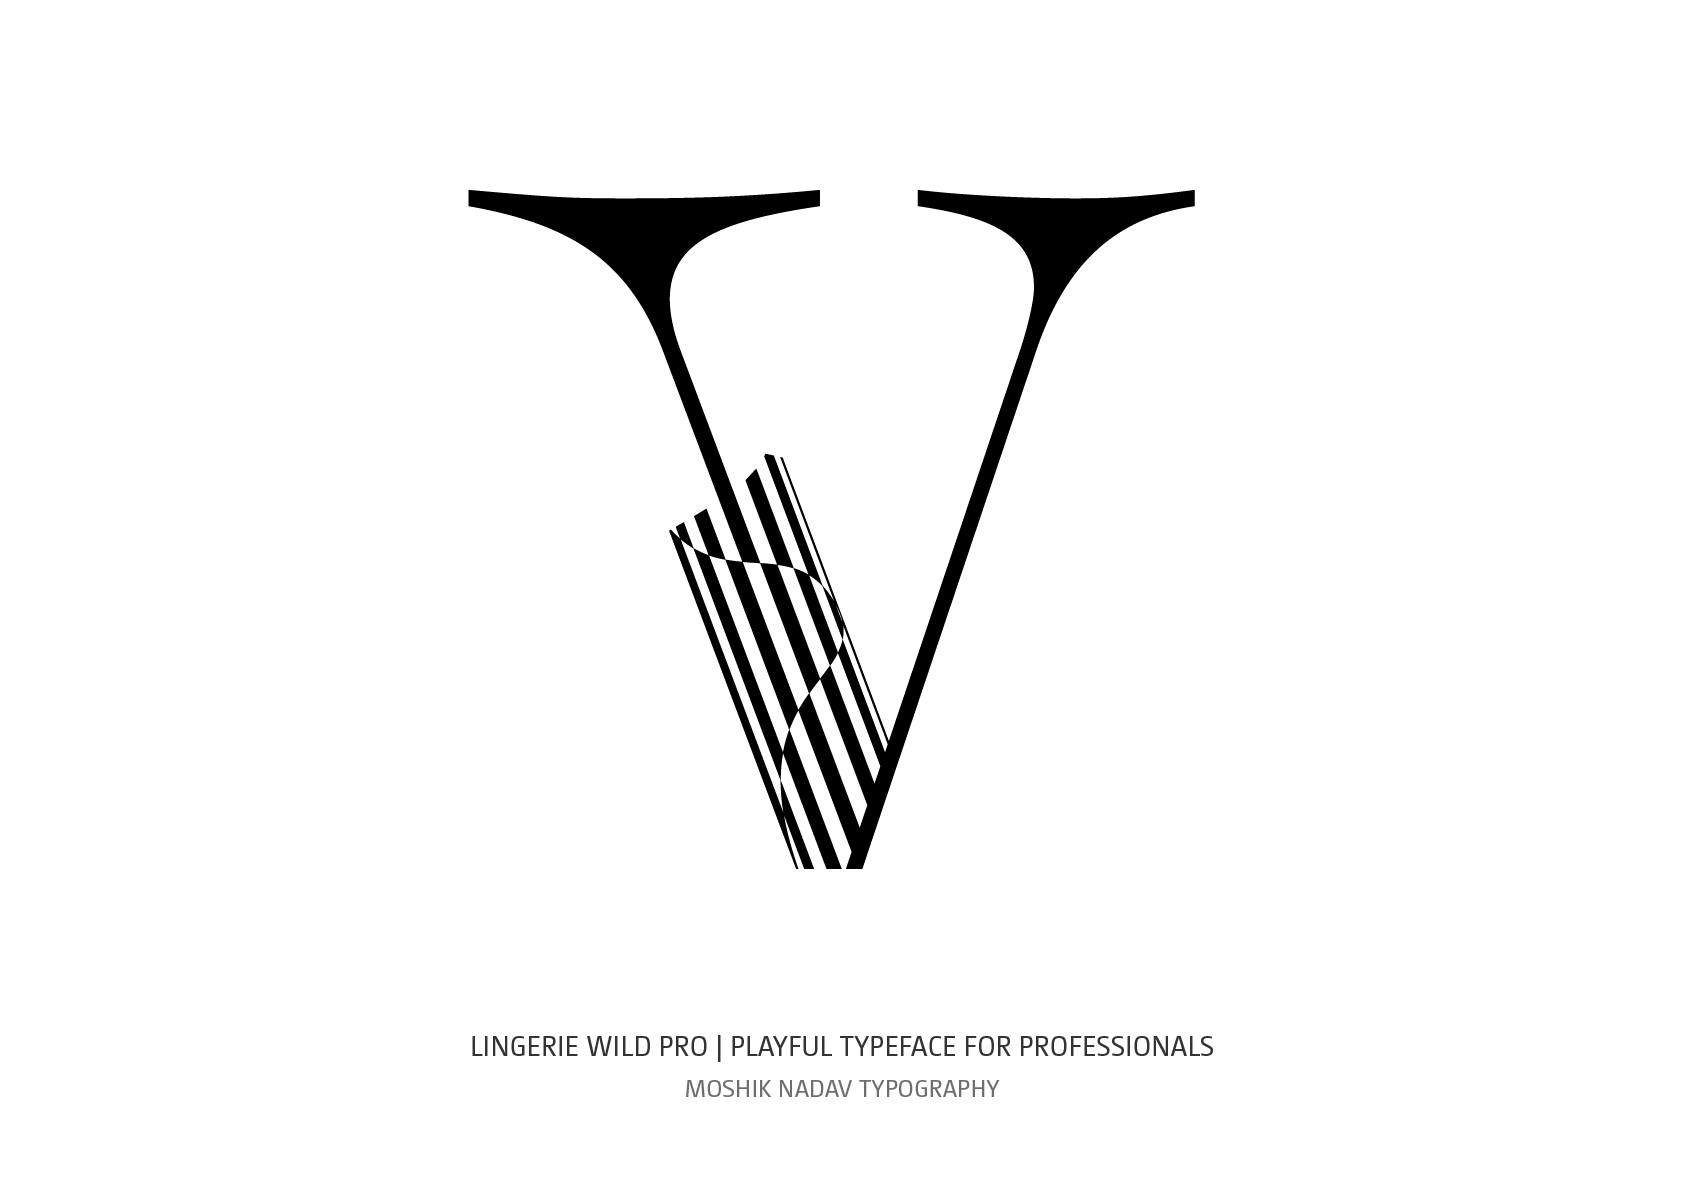 Lingerie Wild Pro uppercase V designed for fashion and luxury